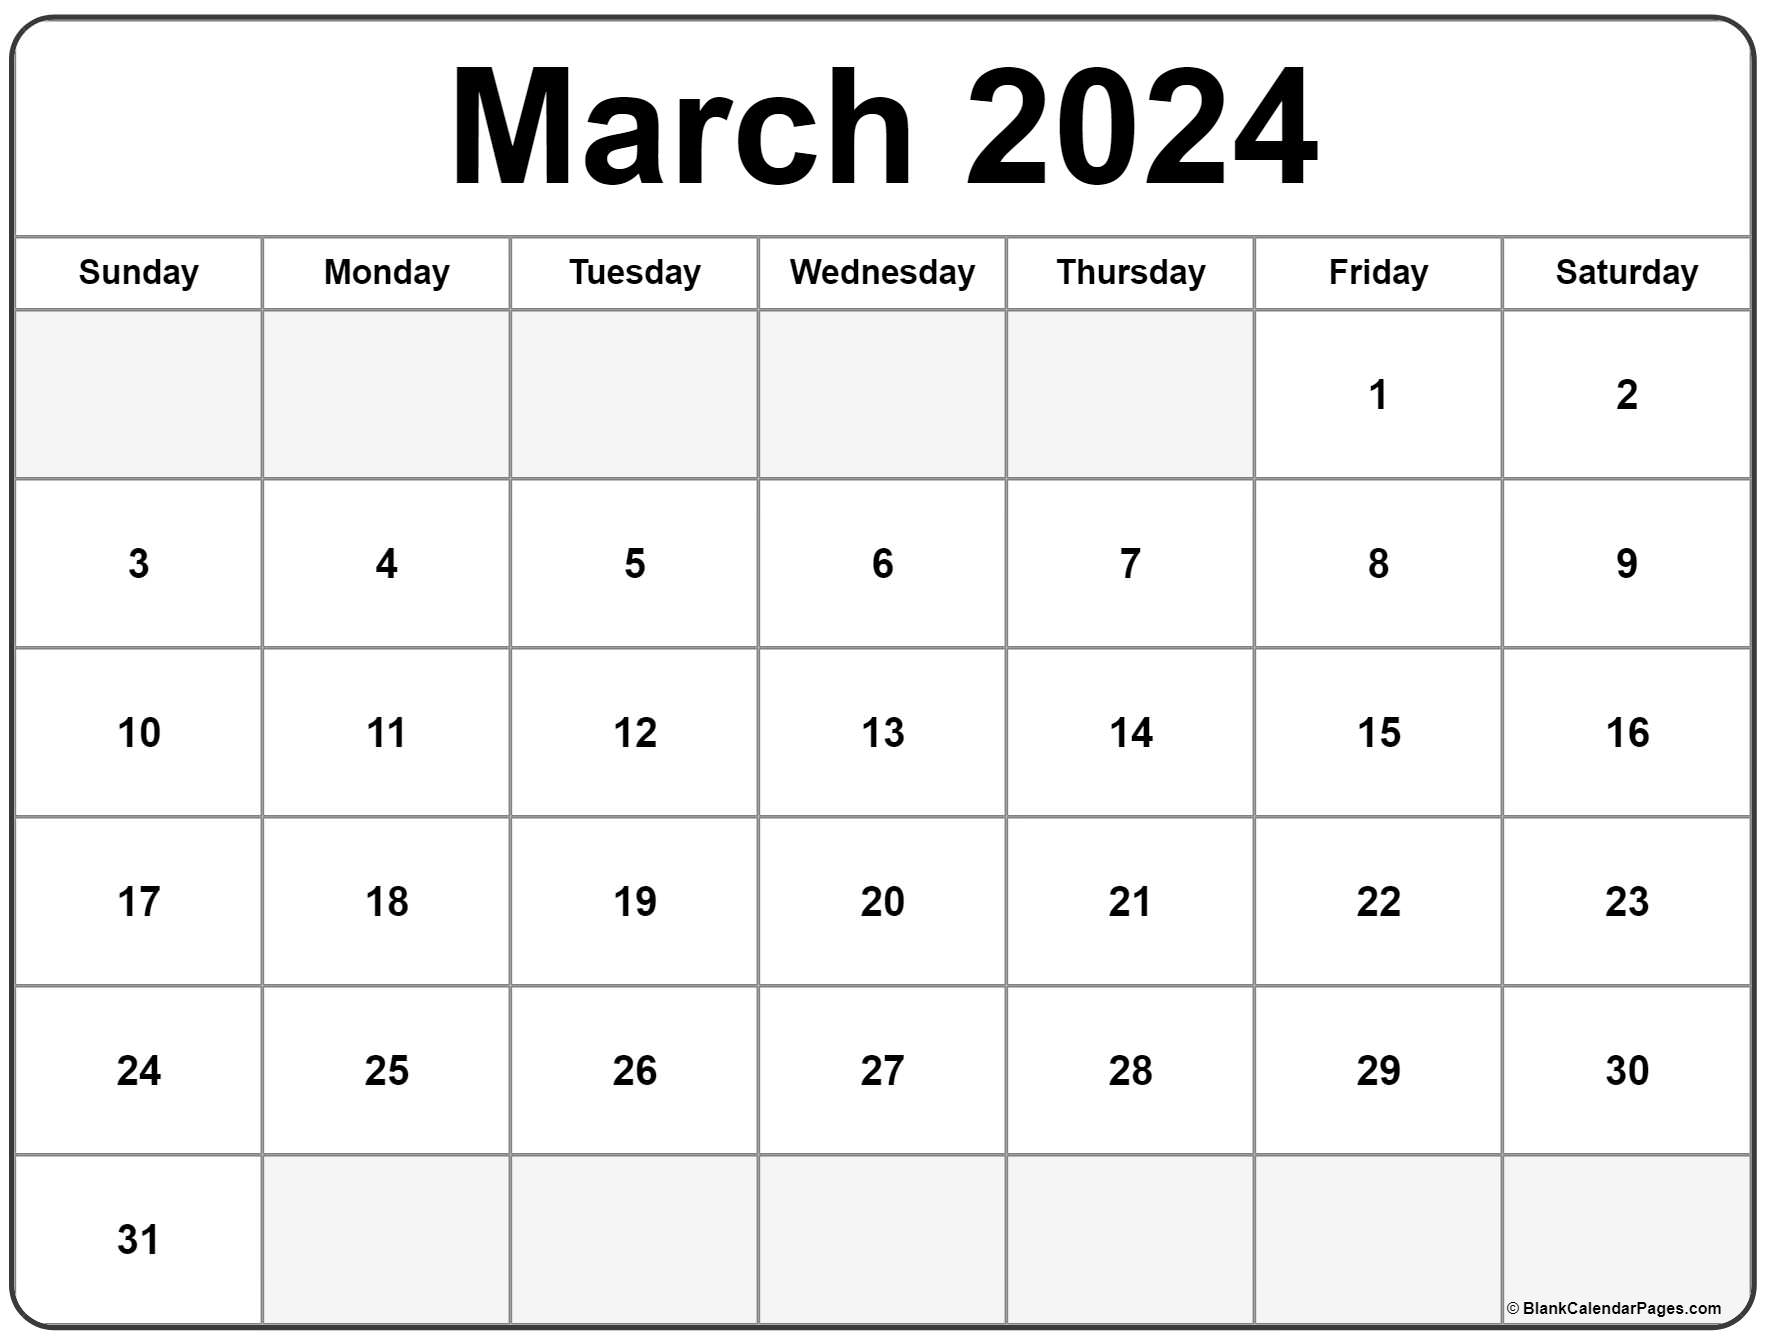 March 2023 Calendar Free Printable Calendar